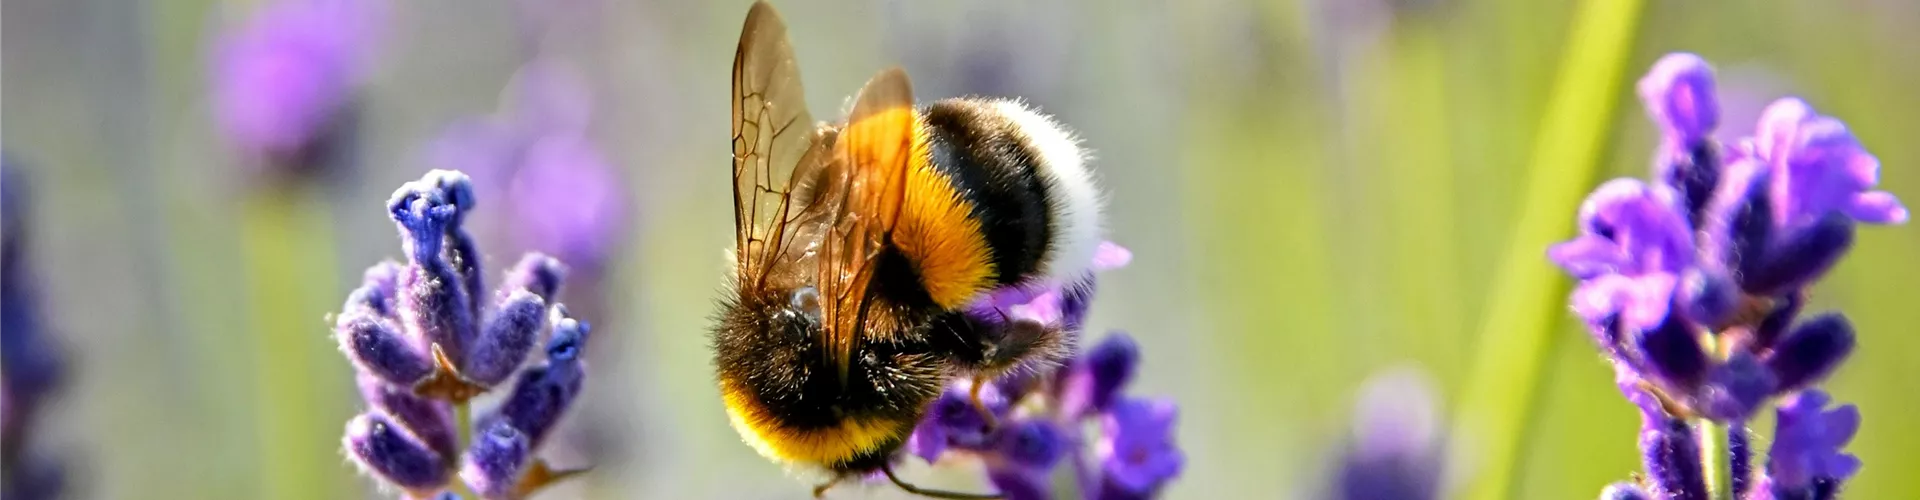 Bienen & Insekten - Bellaflora